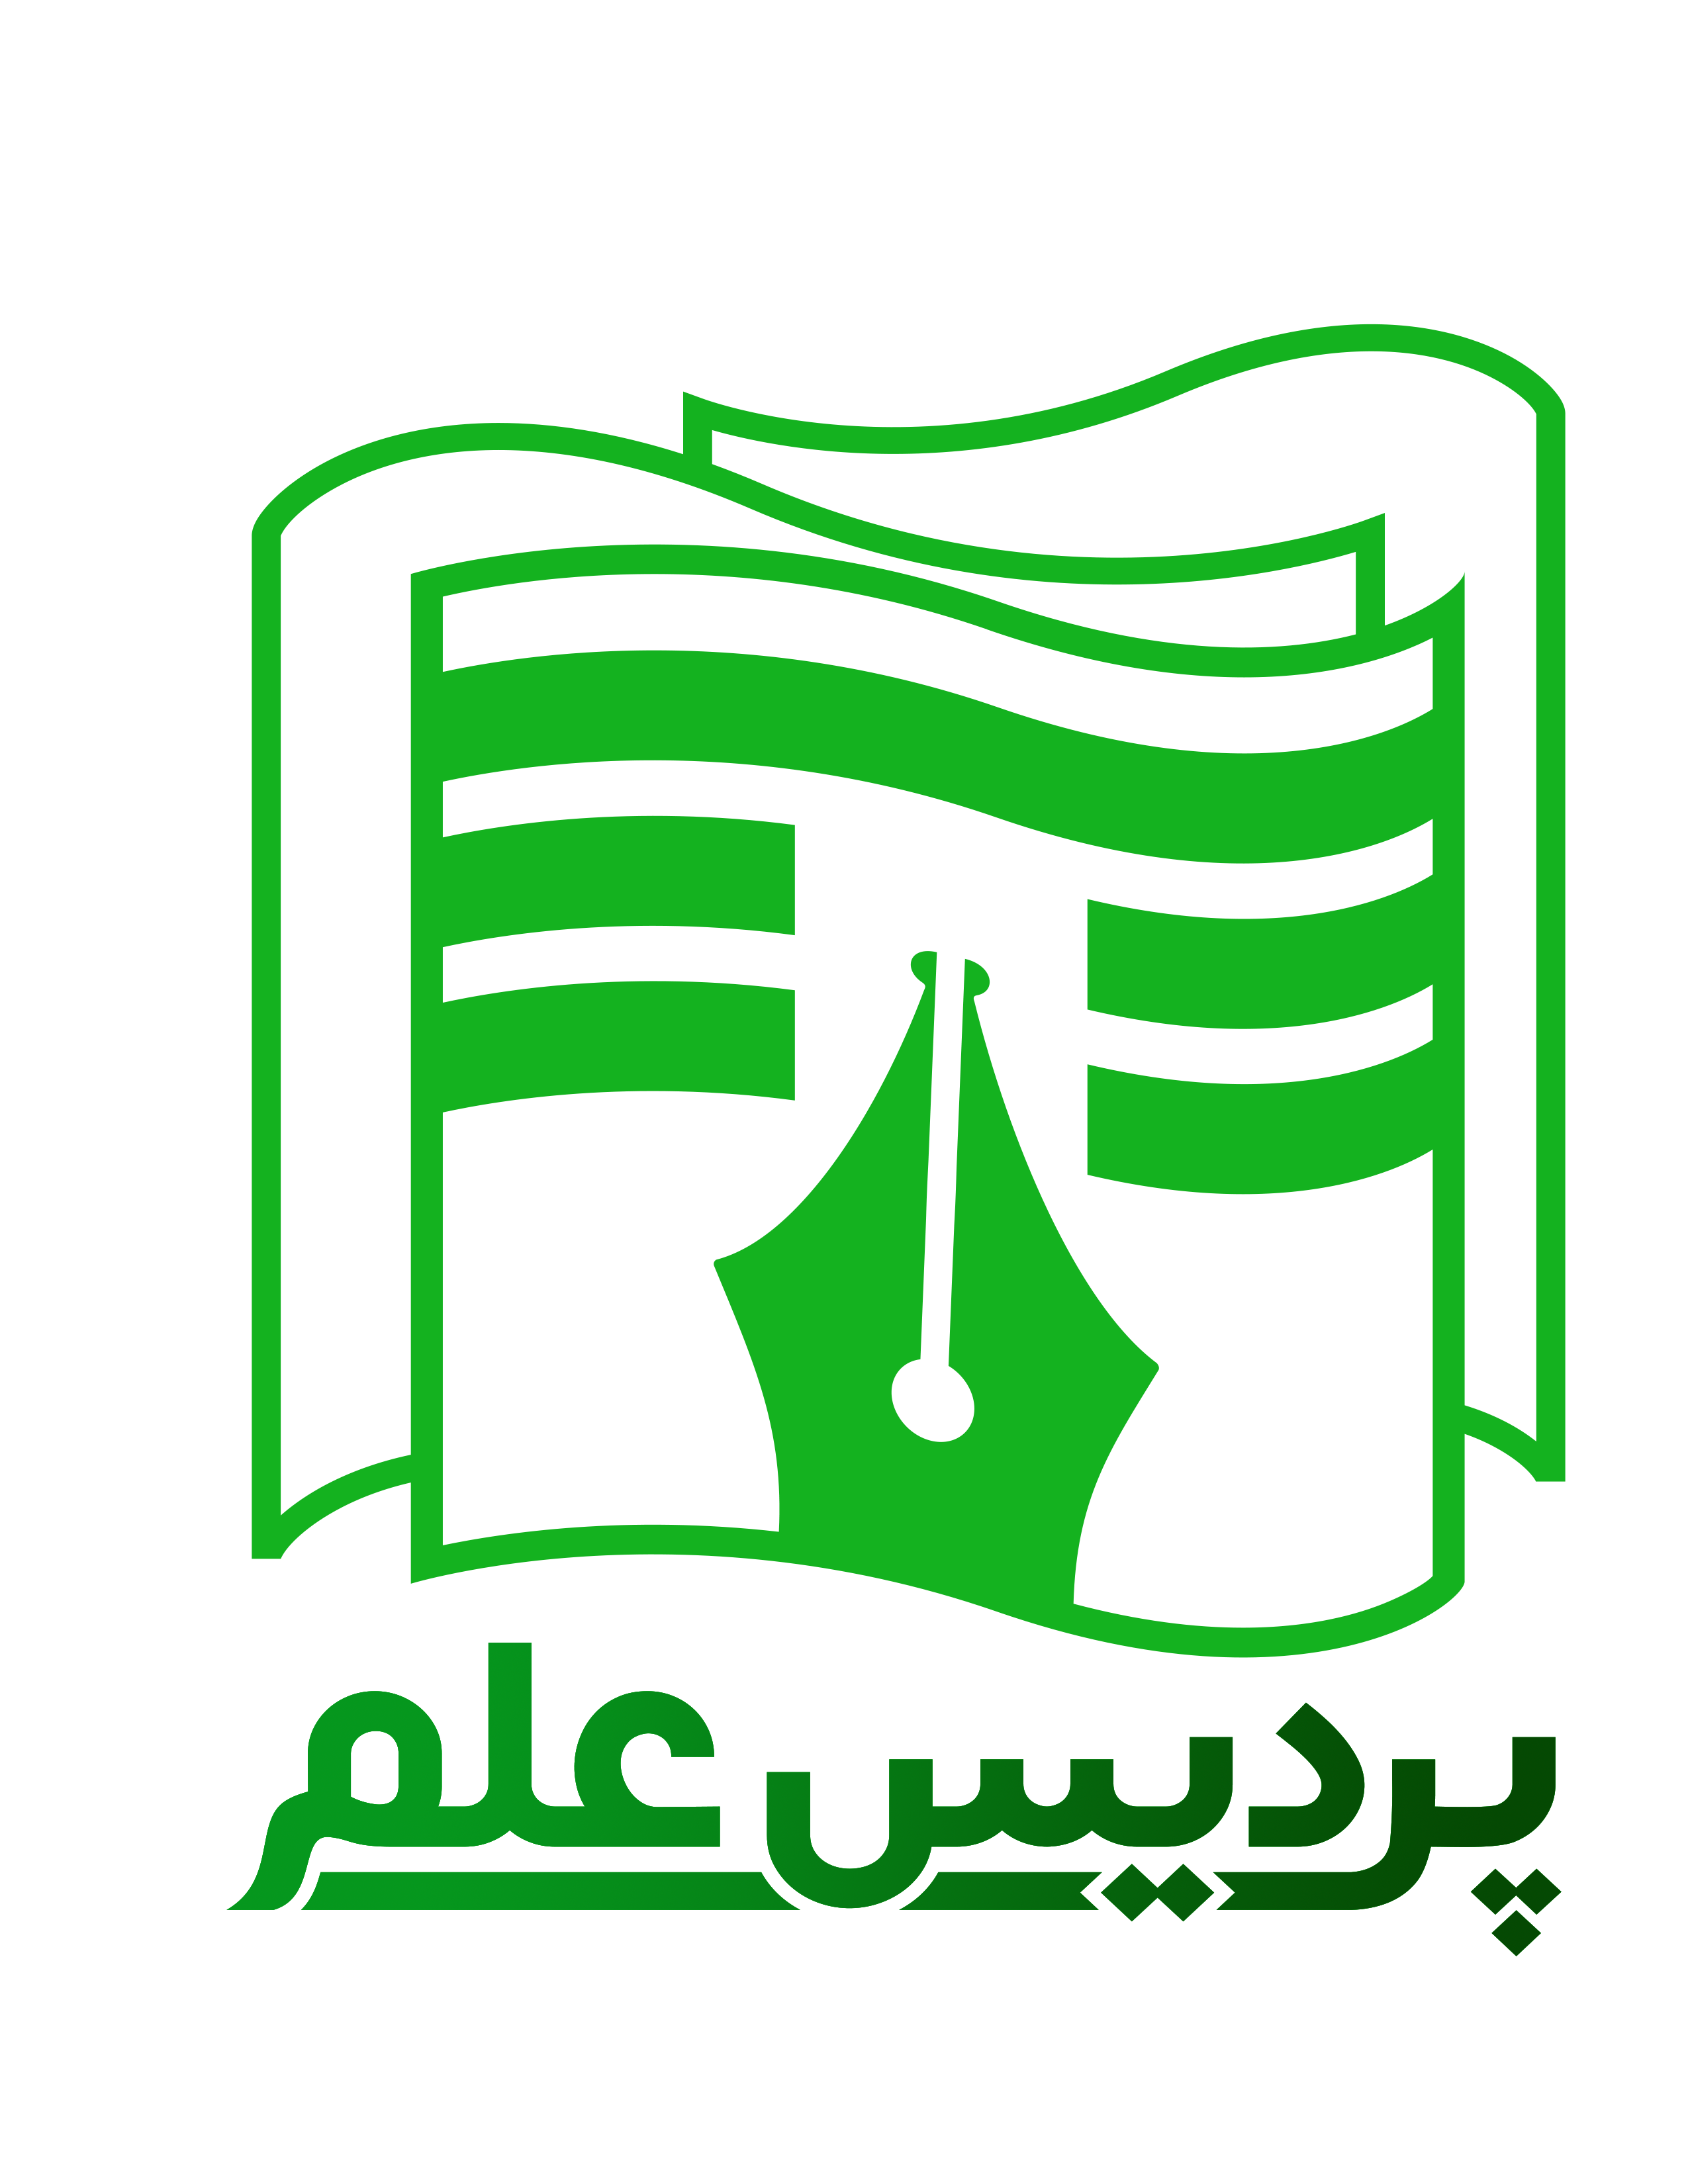 logo-pardis-elm اصول کاربردی مشارکت در ساخت و معاملات املاک - انتشارات علم و دانش